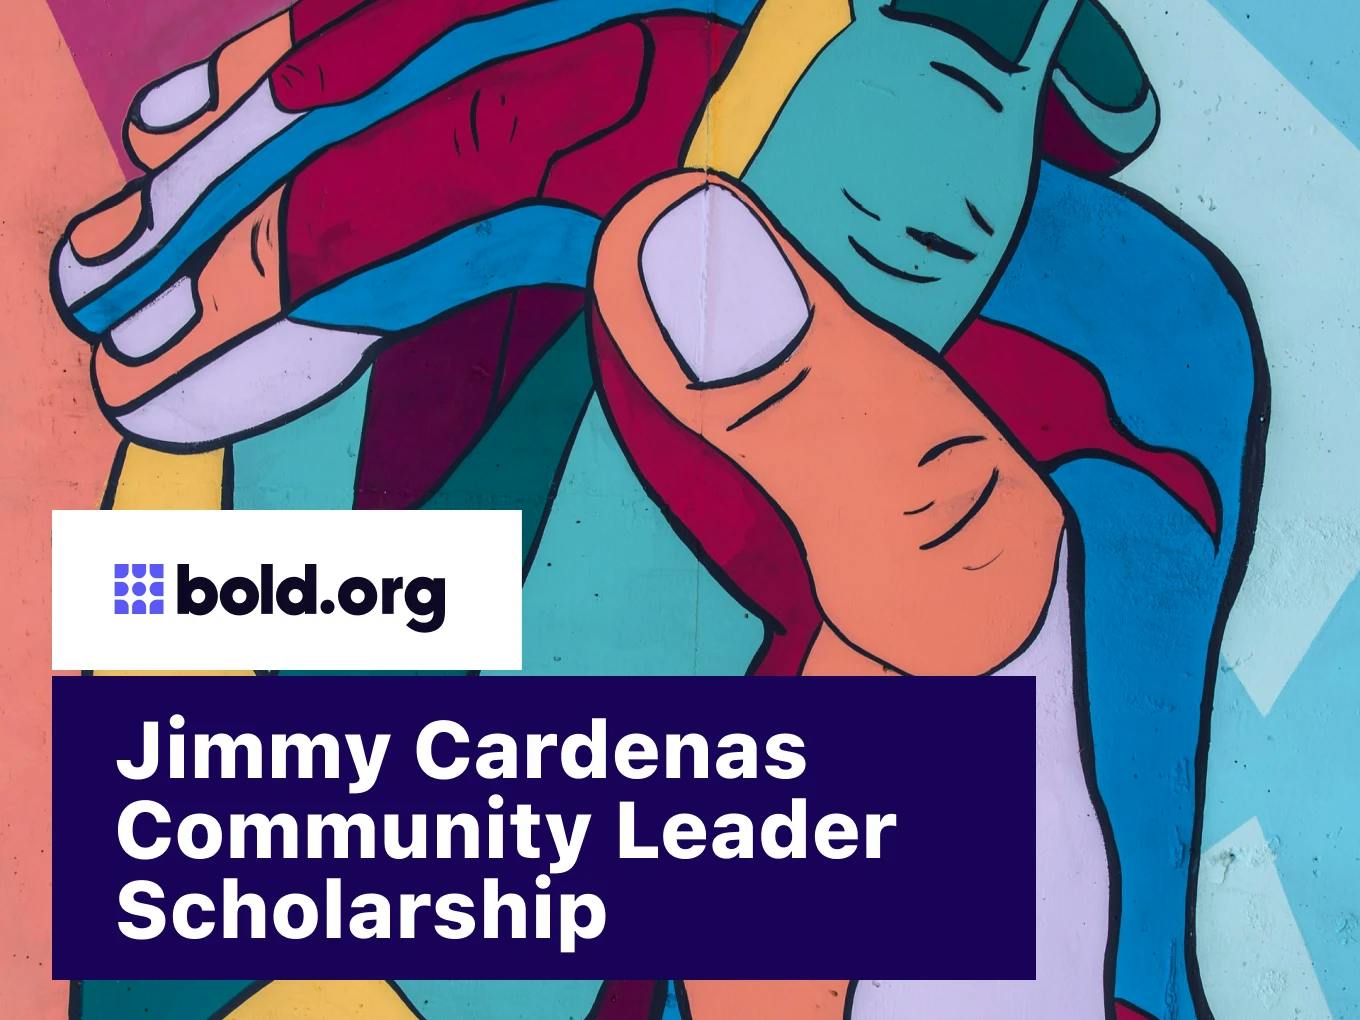 Jimmy Cardenas Community Leader Scholarship